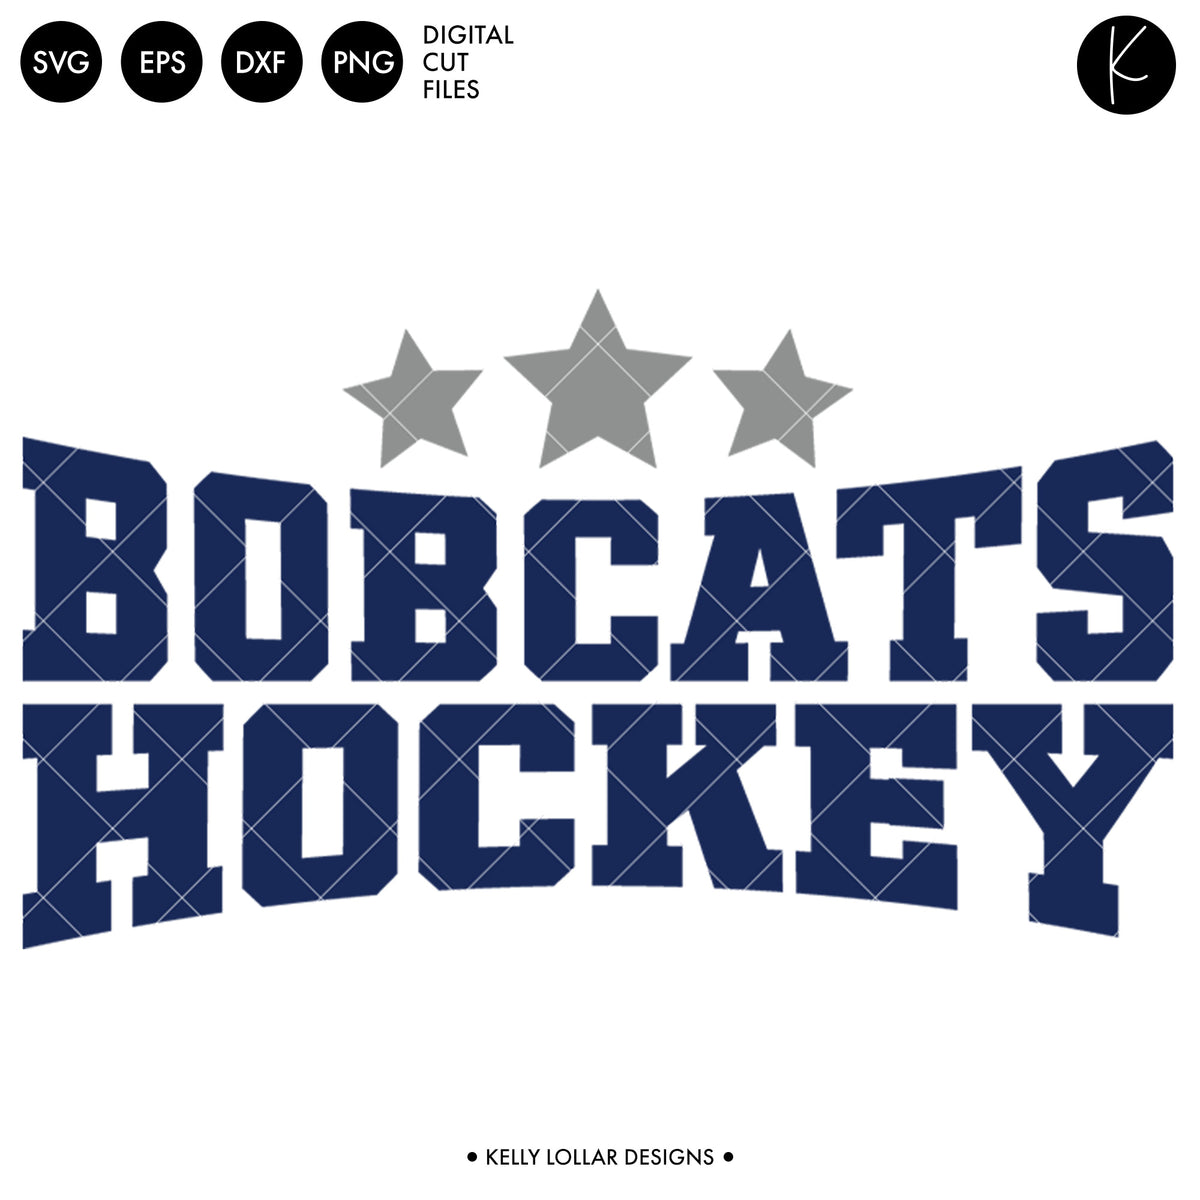 Bobcats Hockey Bundle | SVG DXF EPS PNG Cut Files